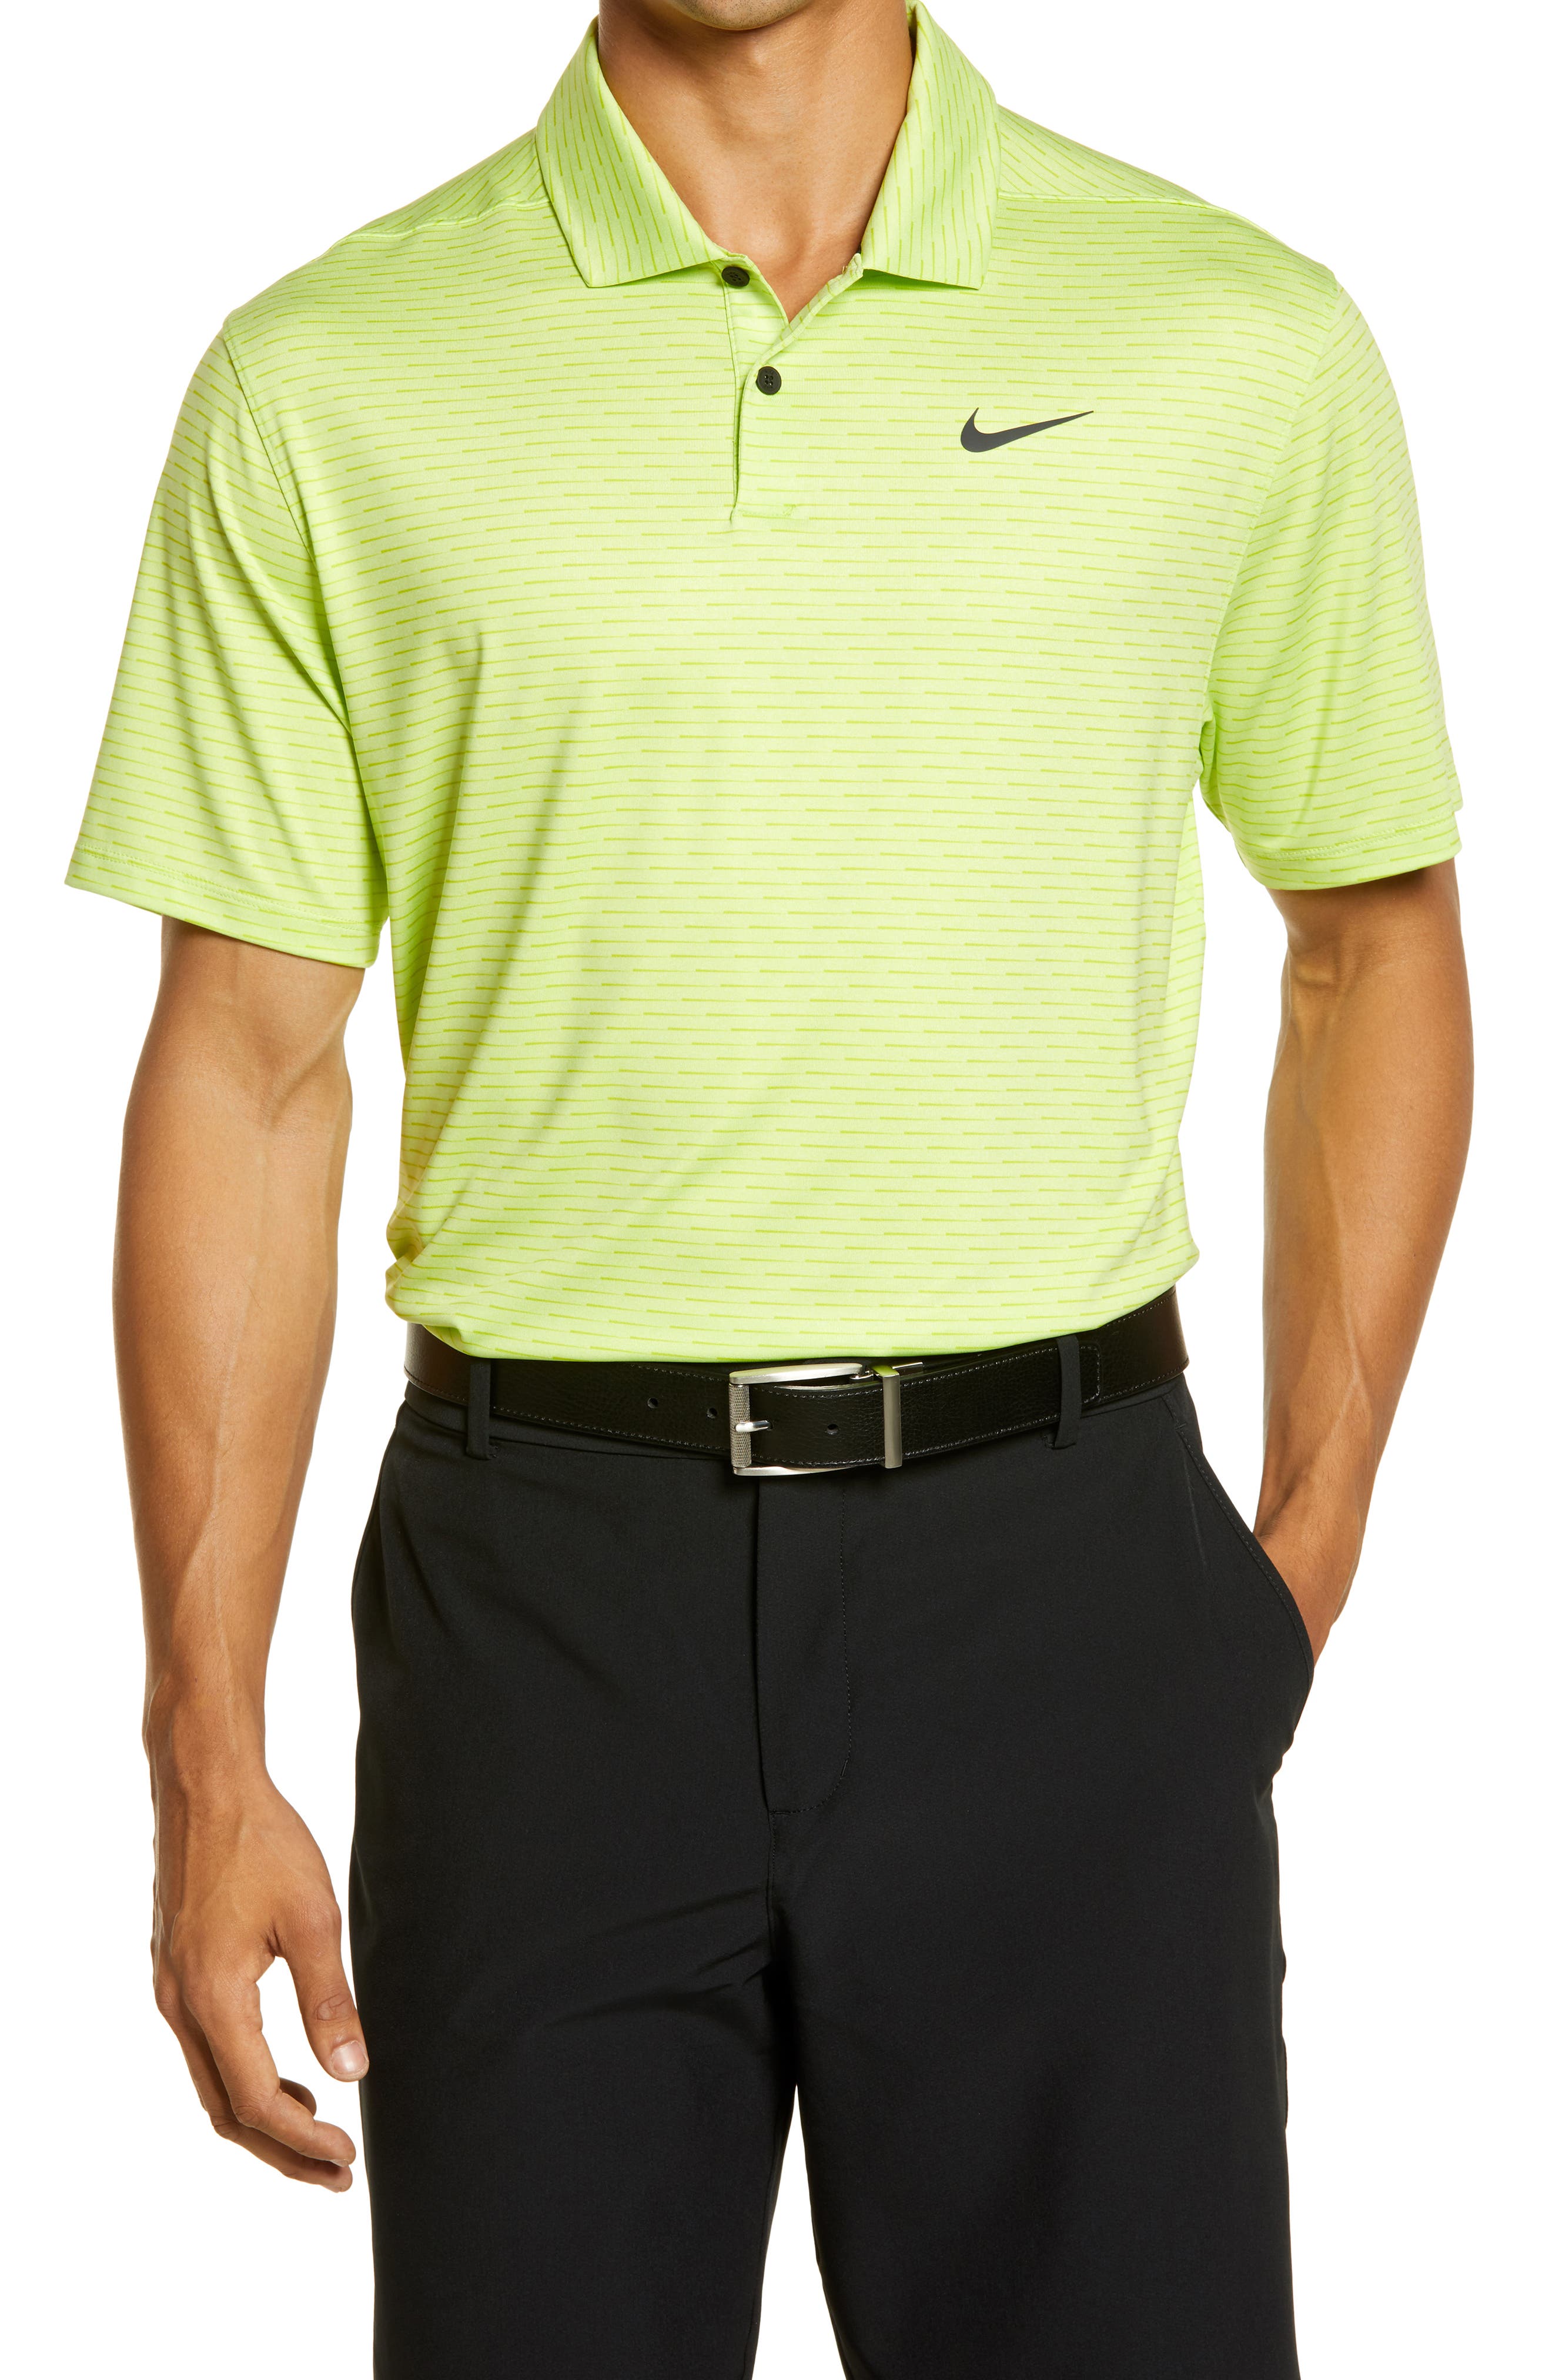 neon golf shirts